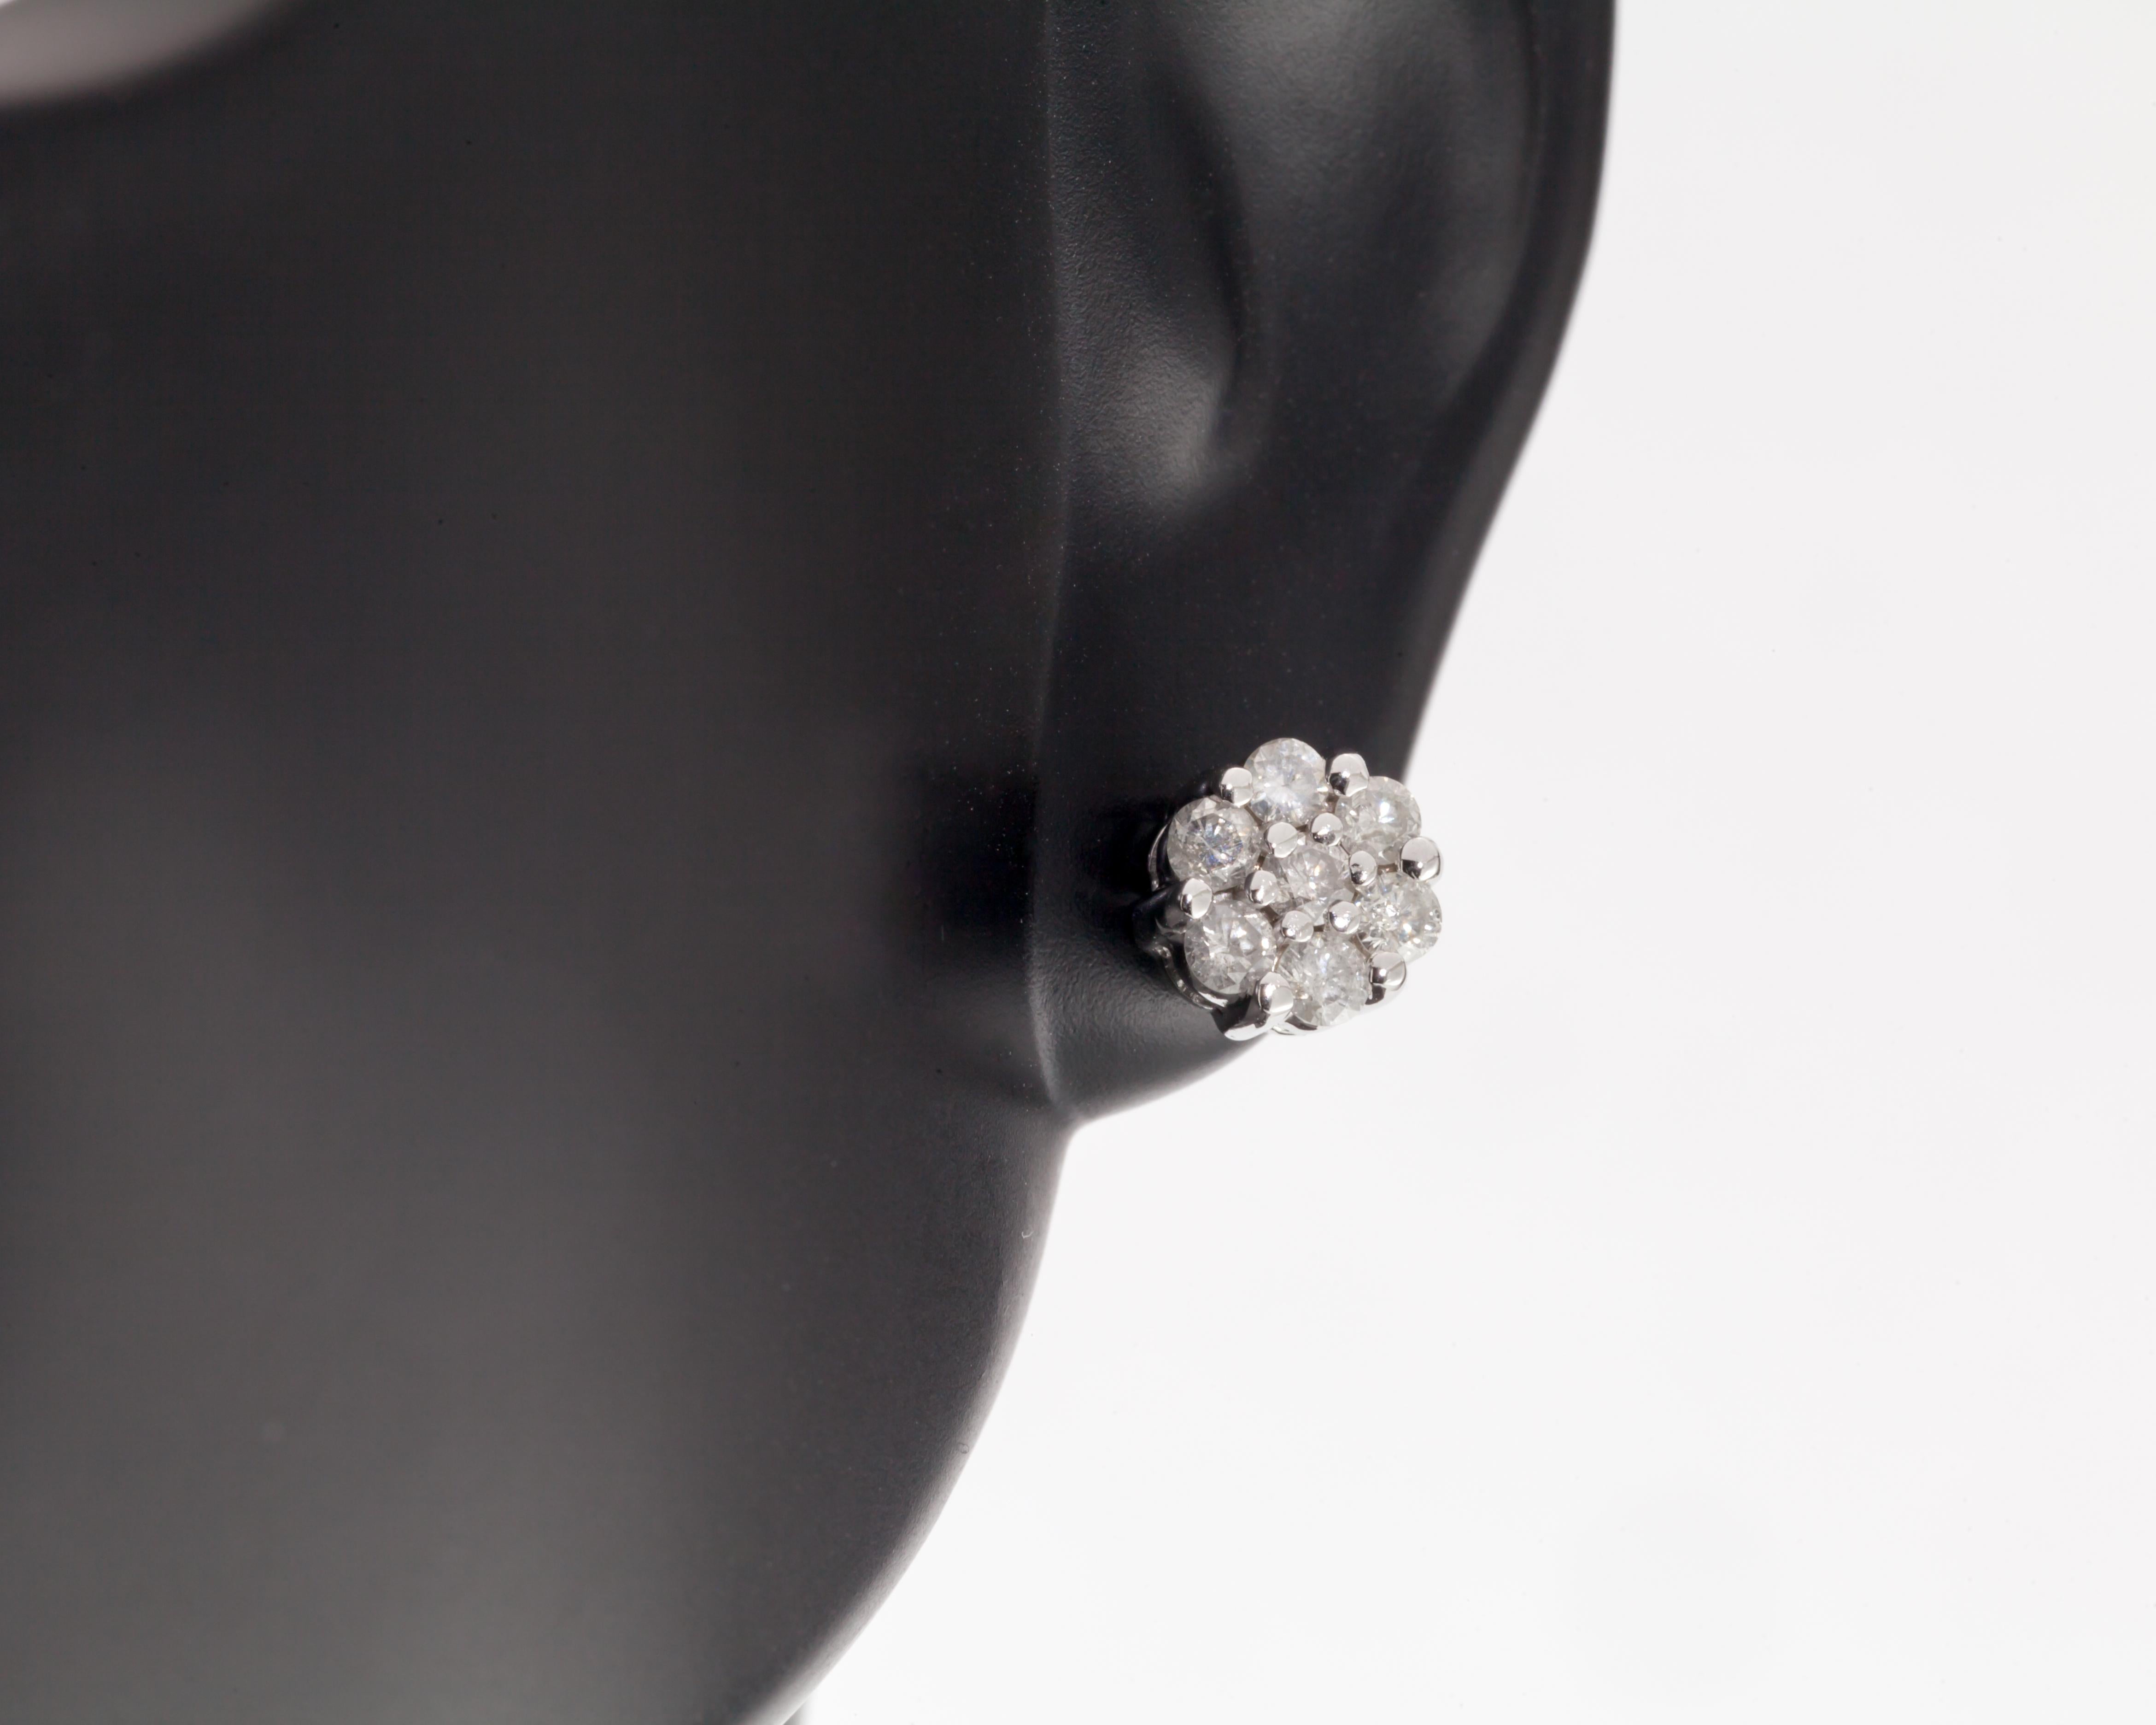 Round Cut 10k White Gold Diamond Floret Stud Earrings W/ Butterfly Backs, Apx. 0.56 Carat For Sale